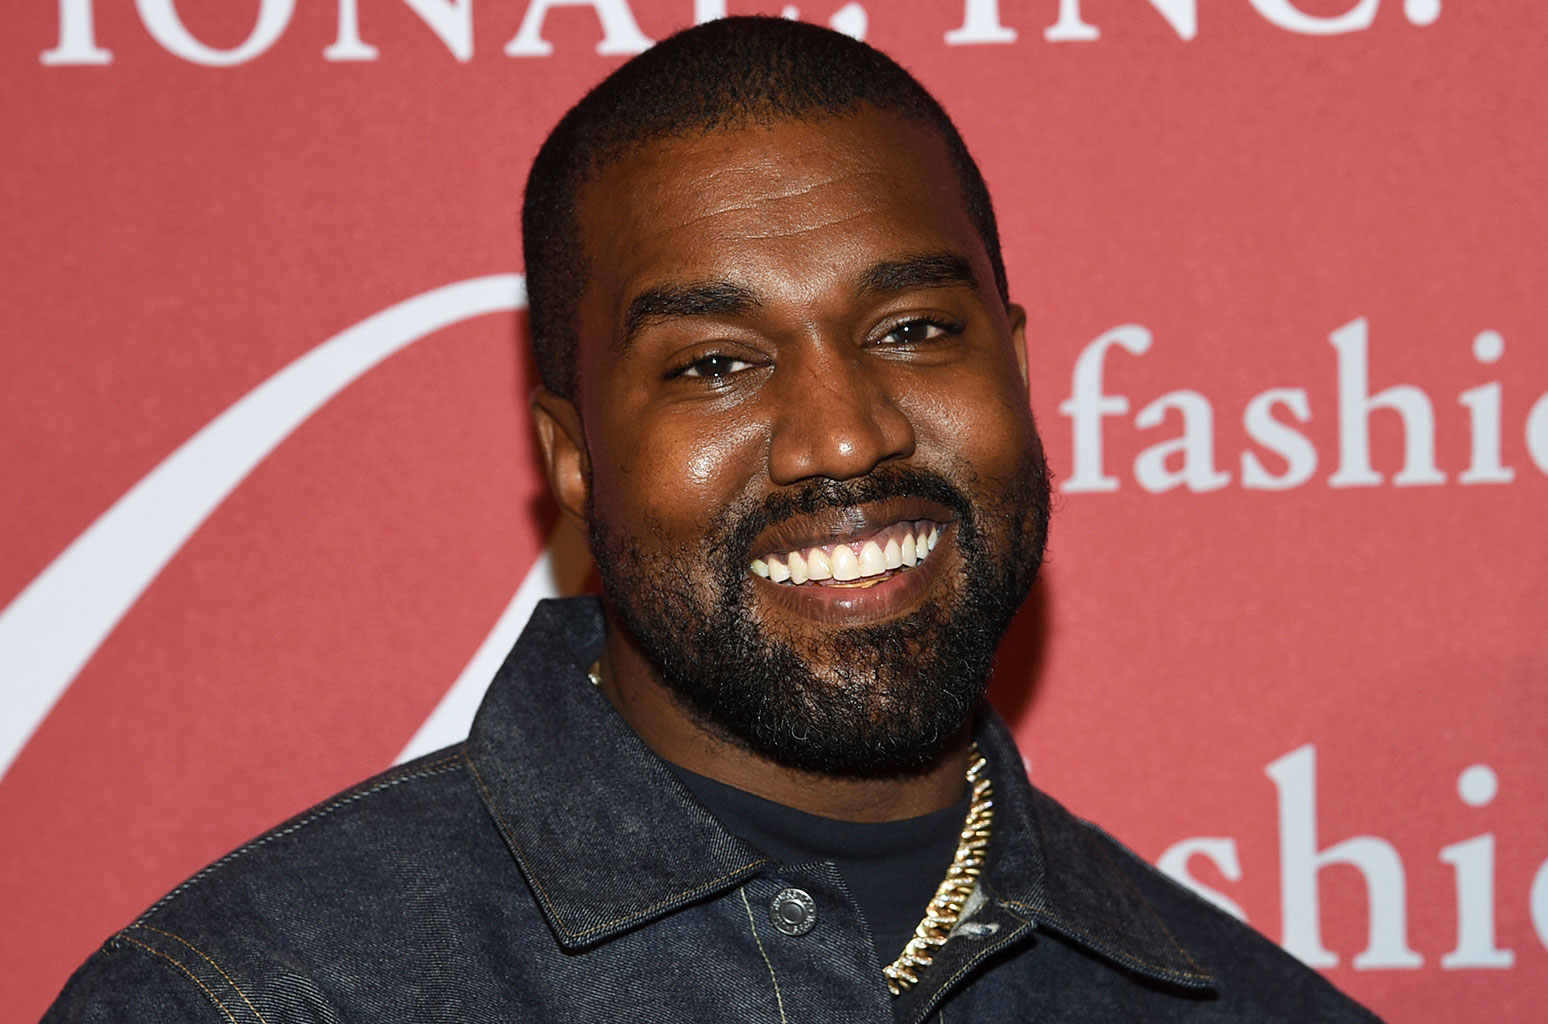 The 10 Most Uplifting Lyrics From Kanye West's 'Jesus Is Born' Album - www.billboard.com - Choir